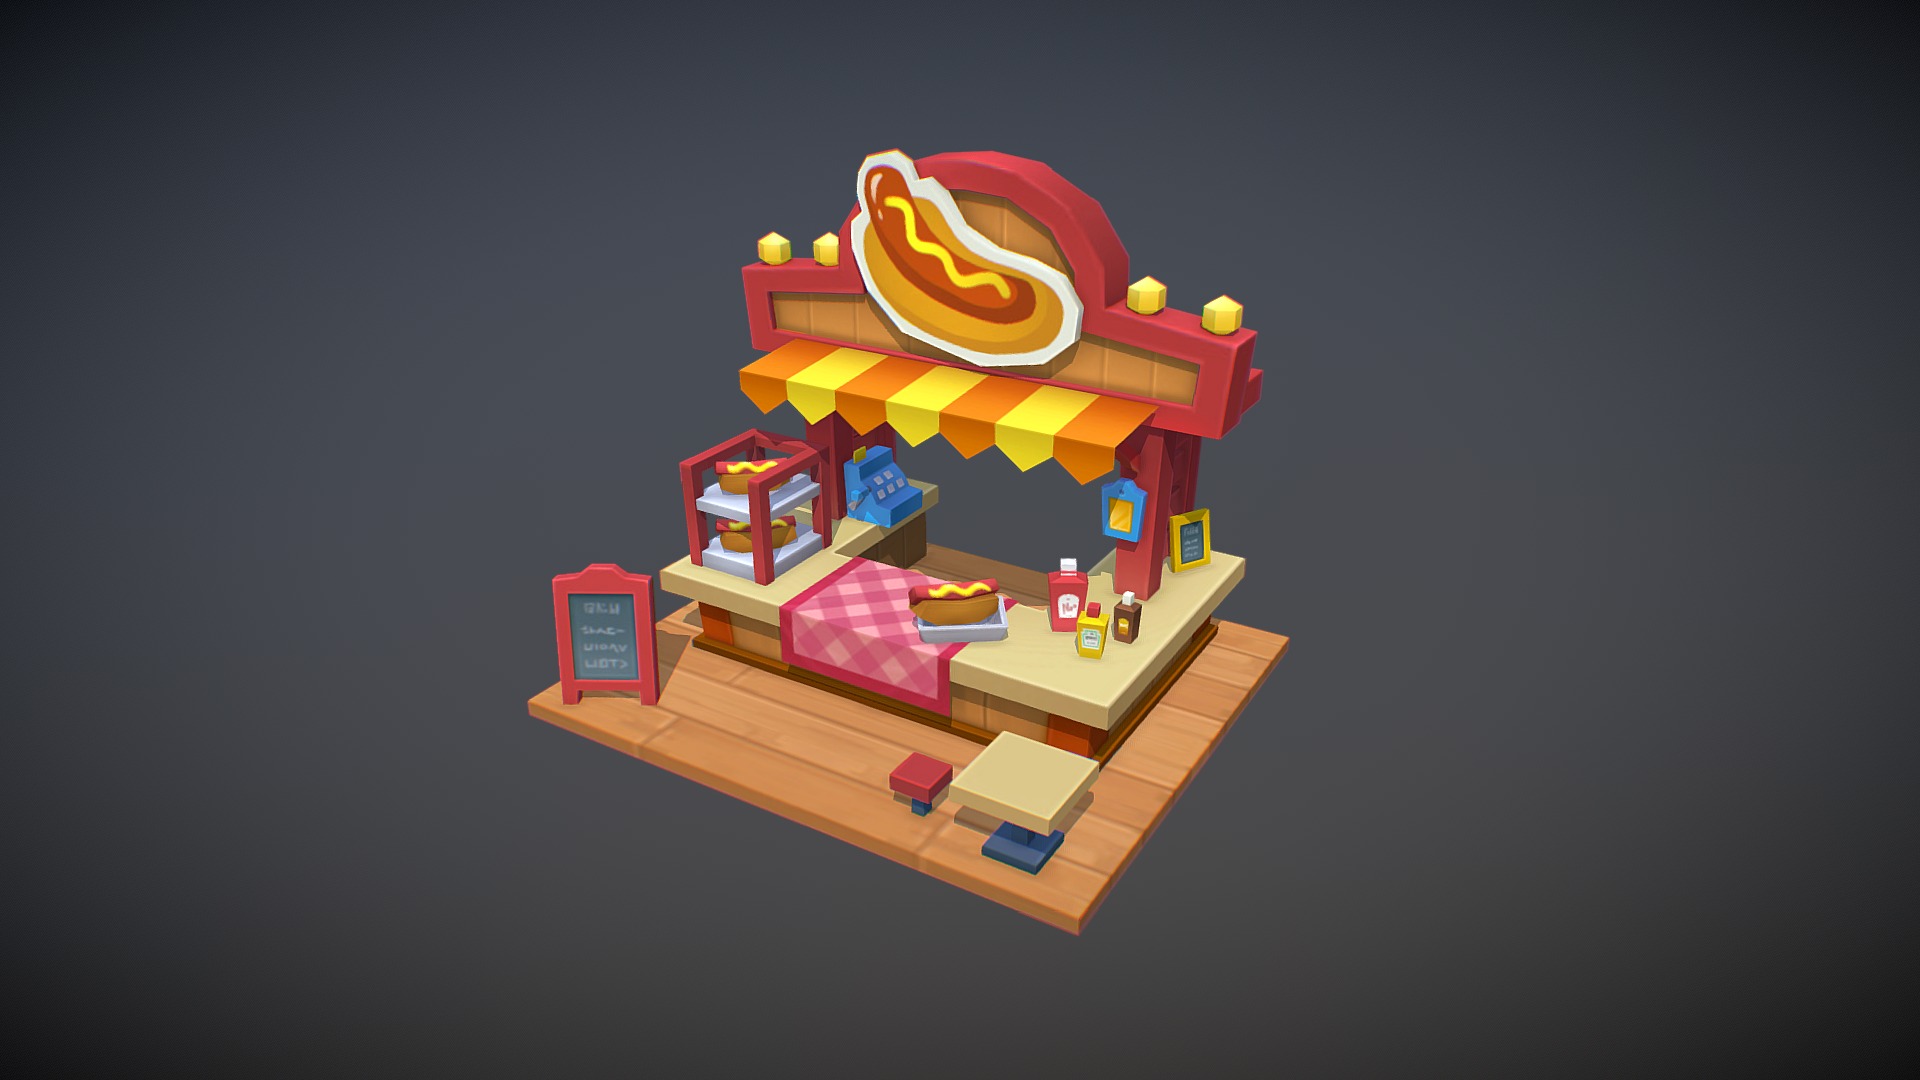 Low poly 3D building -2-

hotdog stand - Low poly 3D building -2- - 3D model by HOYA CHOE (@painterhoya) 3d model